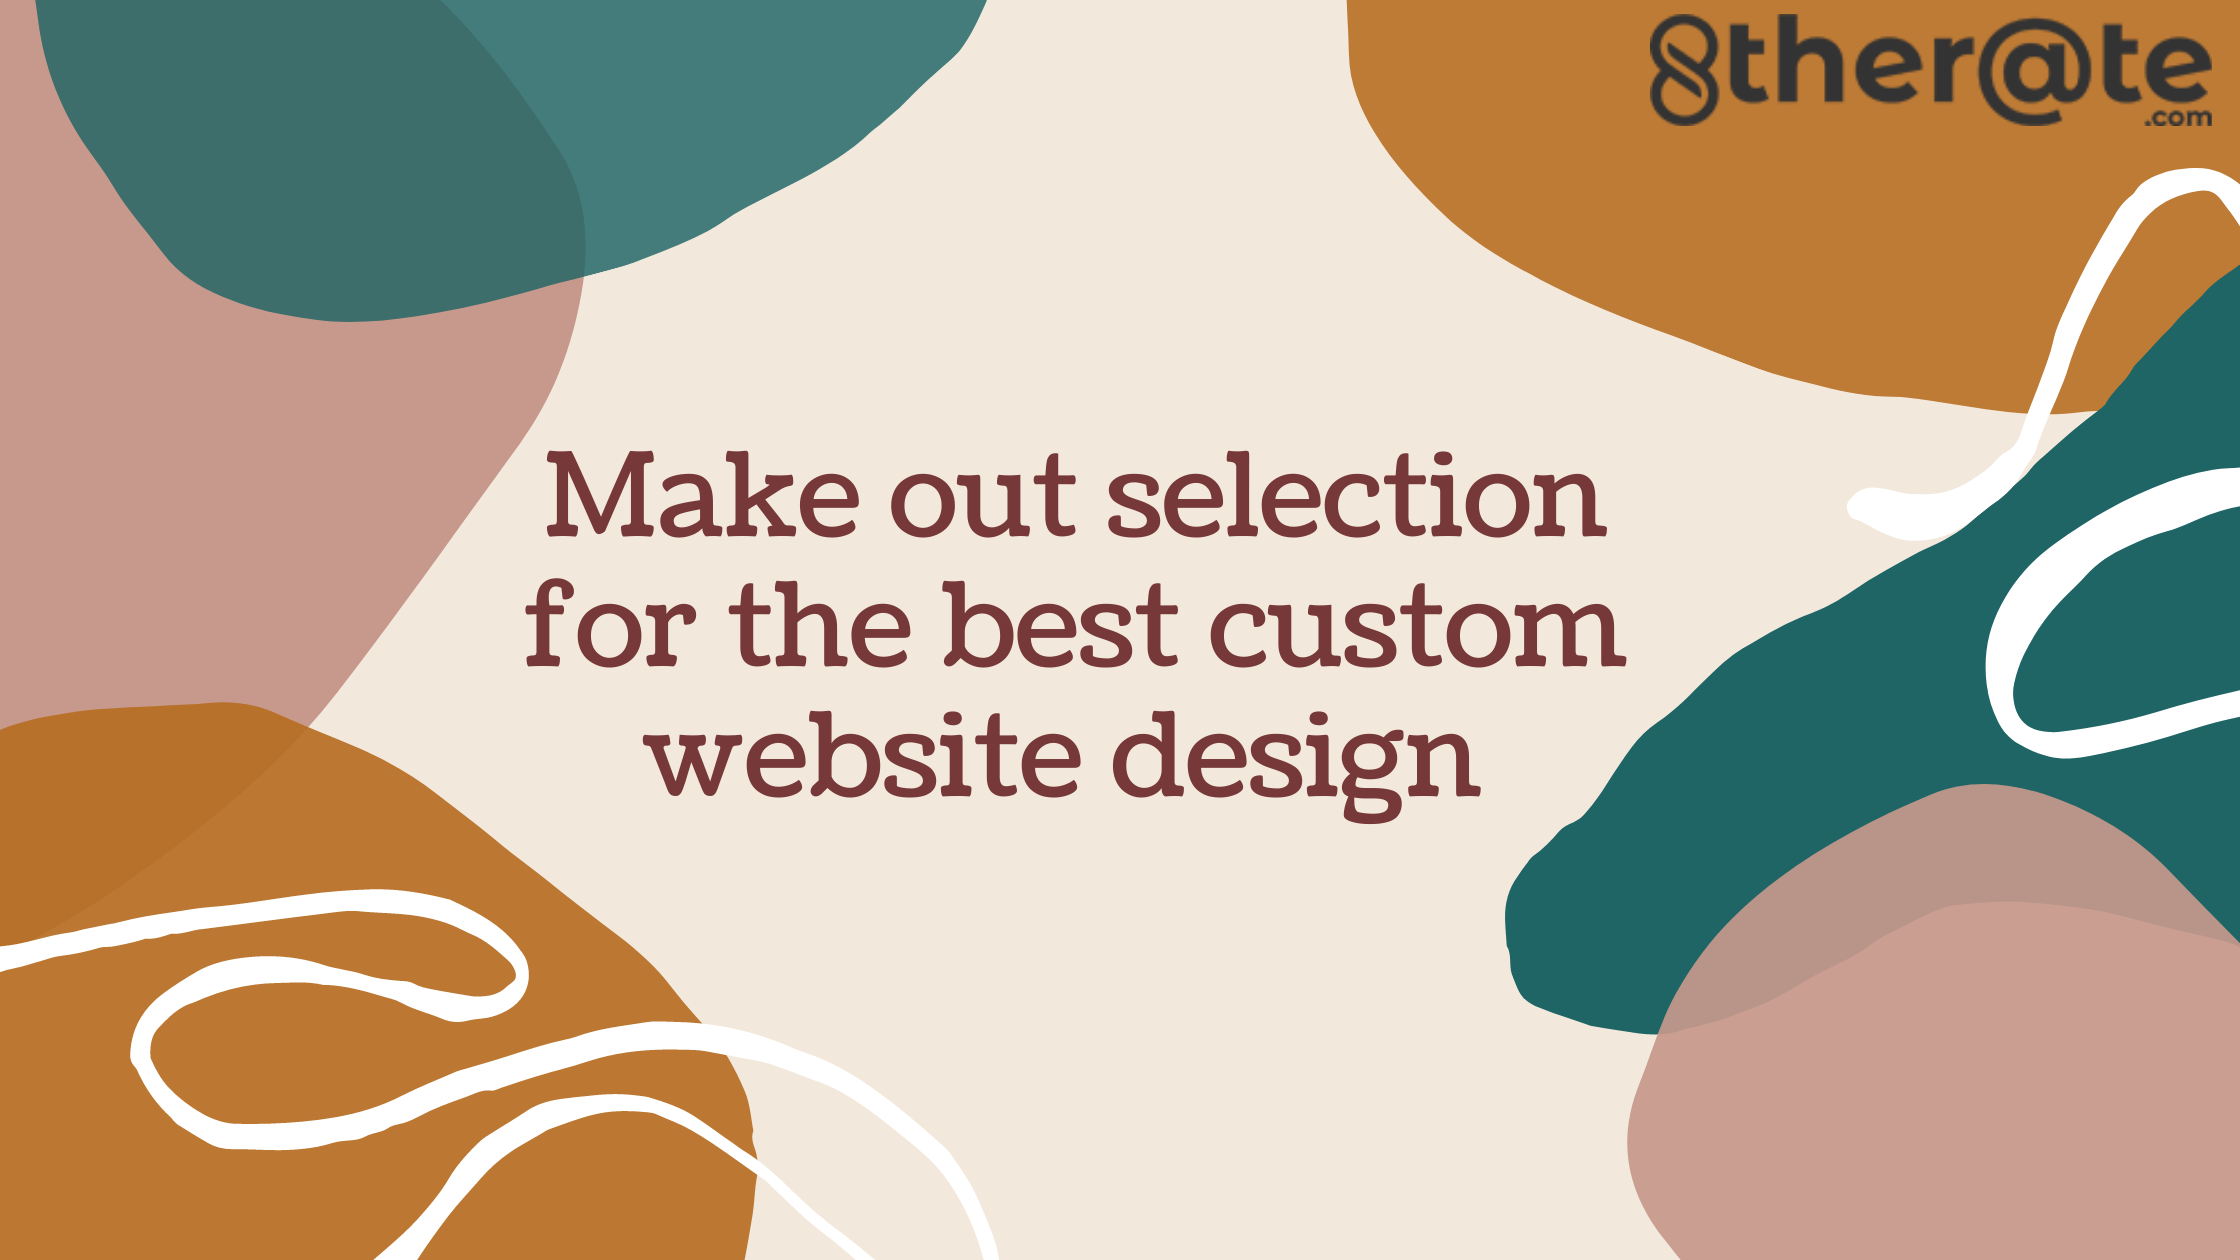 public/uploads/2021/11/Make-out-selection-for-the-best-custom-website-design.png